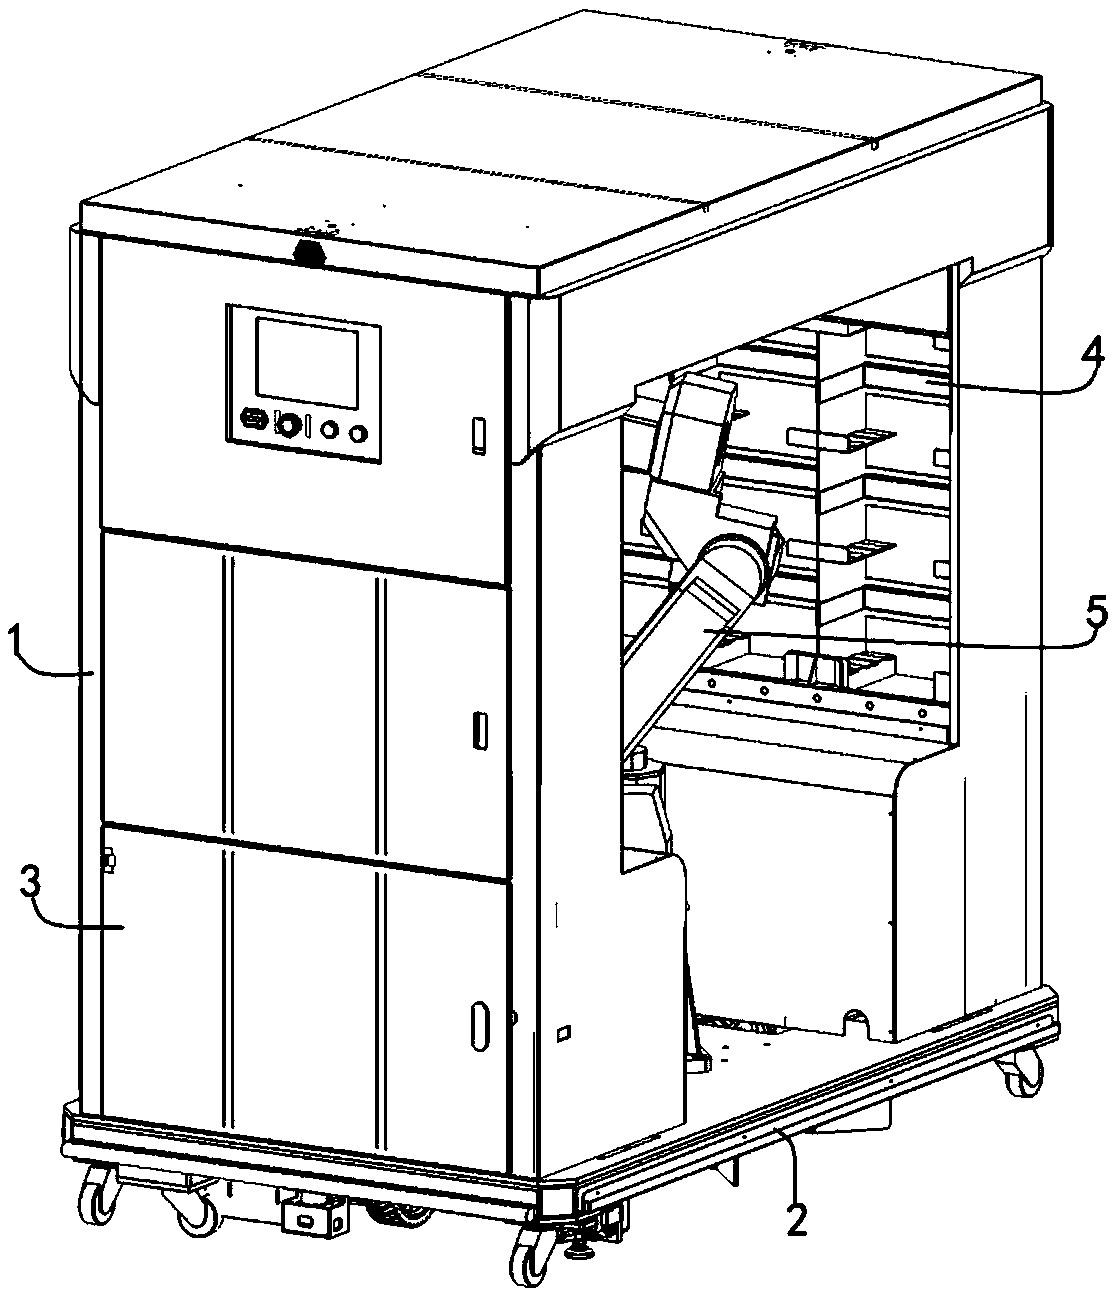 A grip-type cardboard transporter